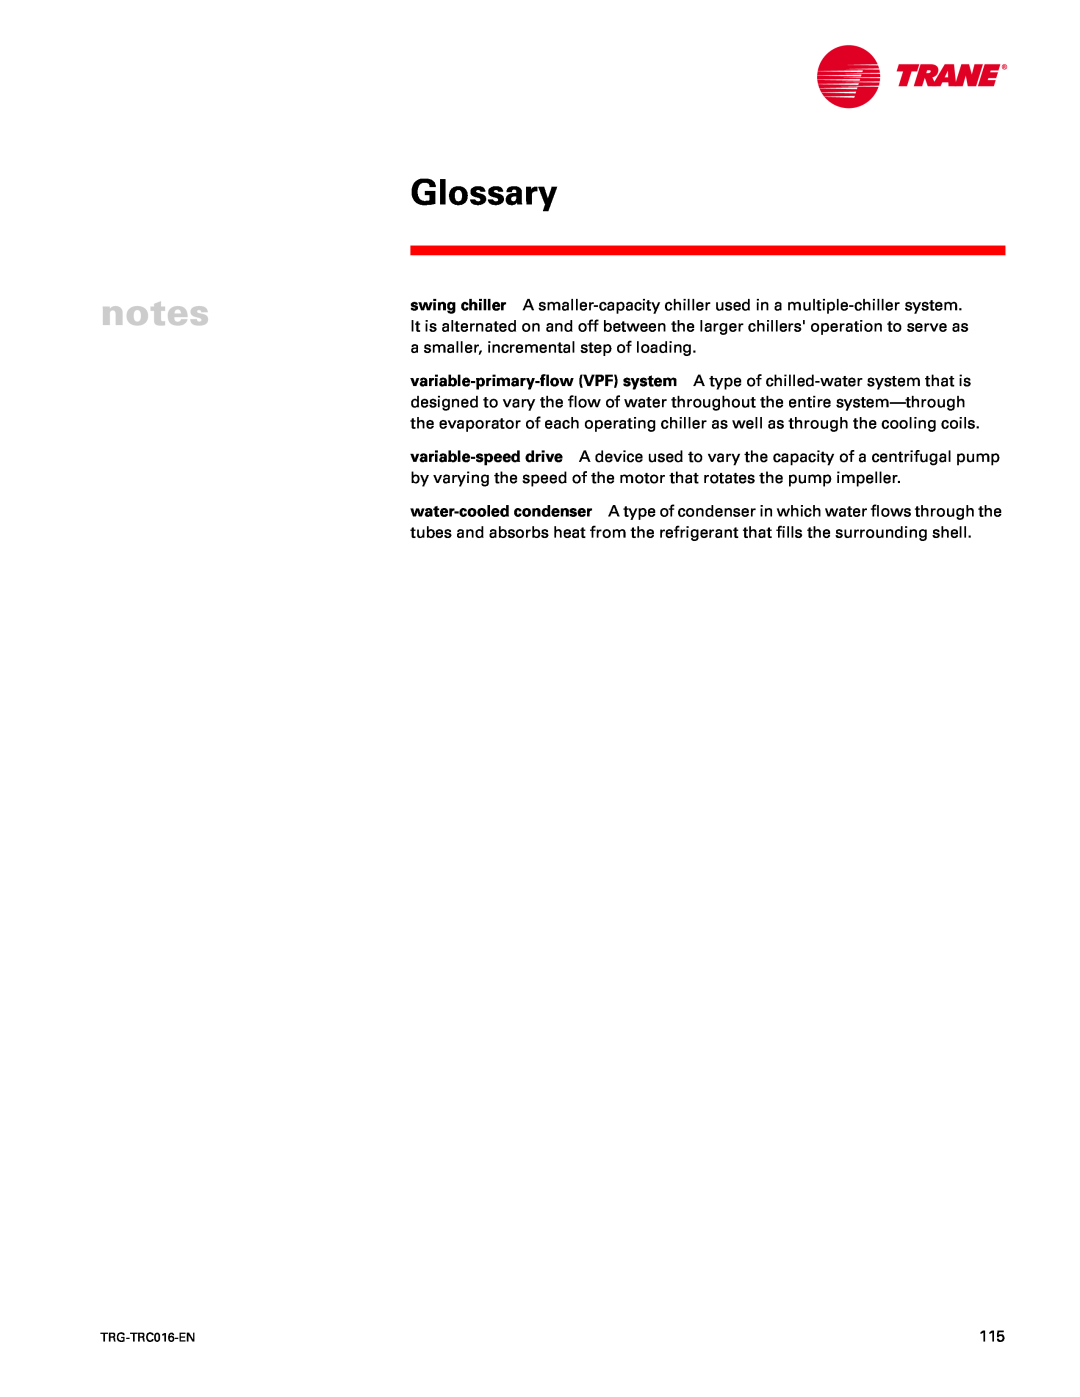 Trane TRG-TRC016-EN manual notes, Glossary 